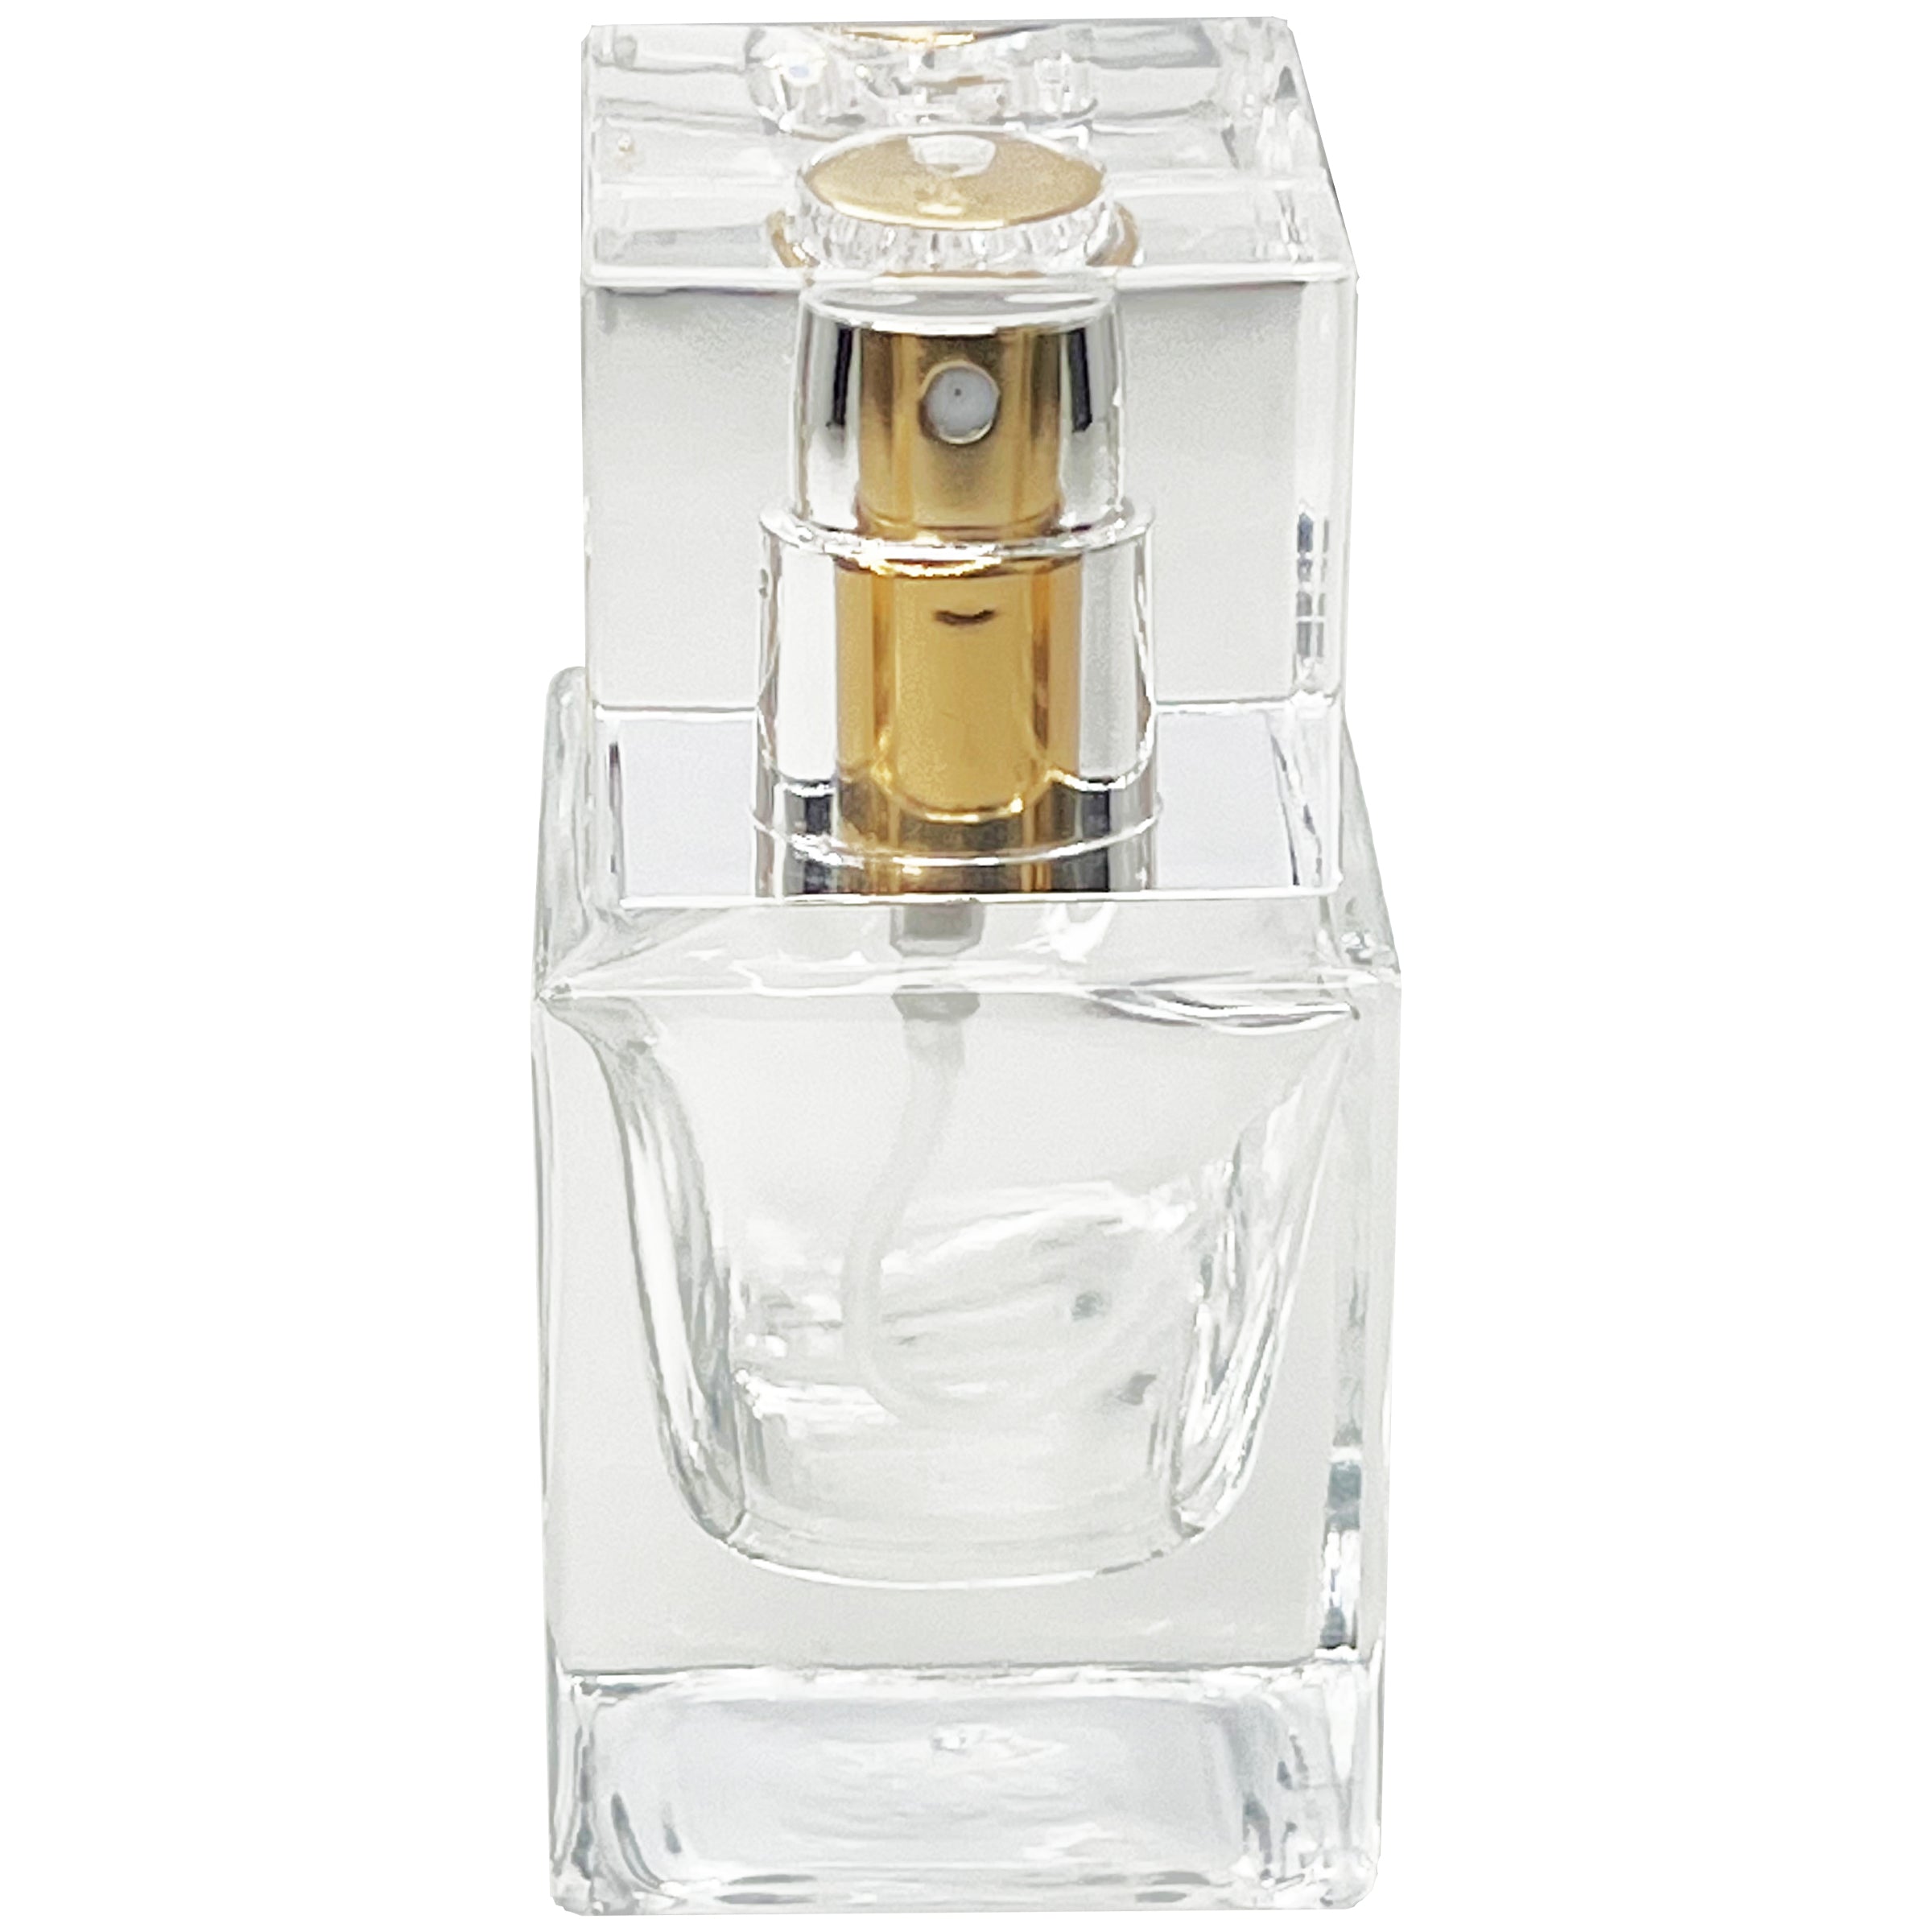 25ml 0.85oz High Quality Cube thick glass perfume spray bottles